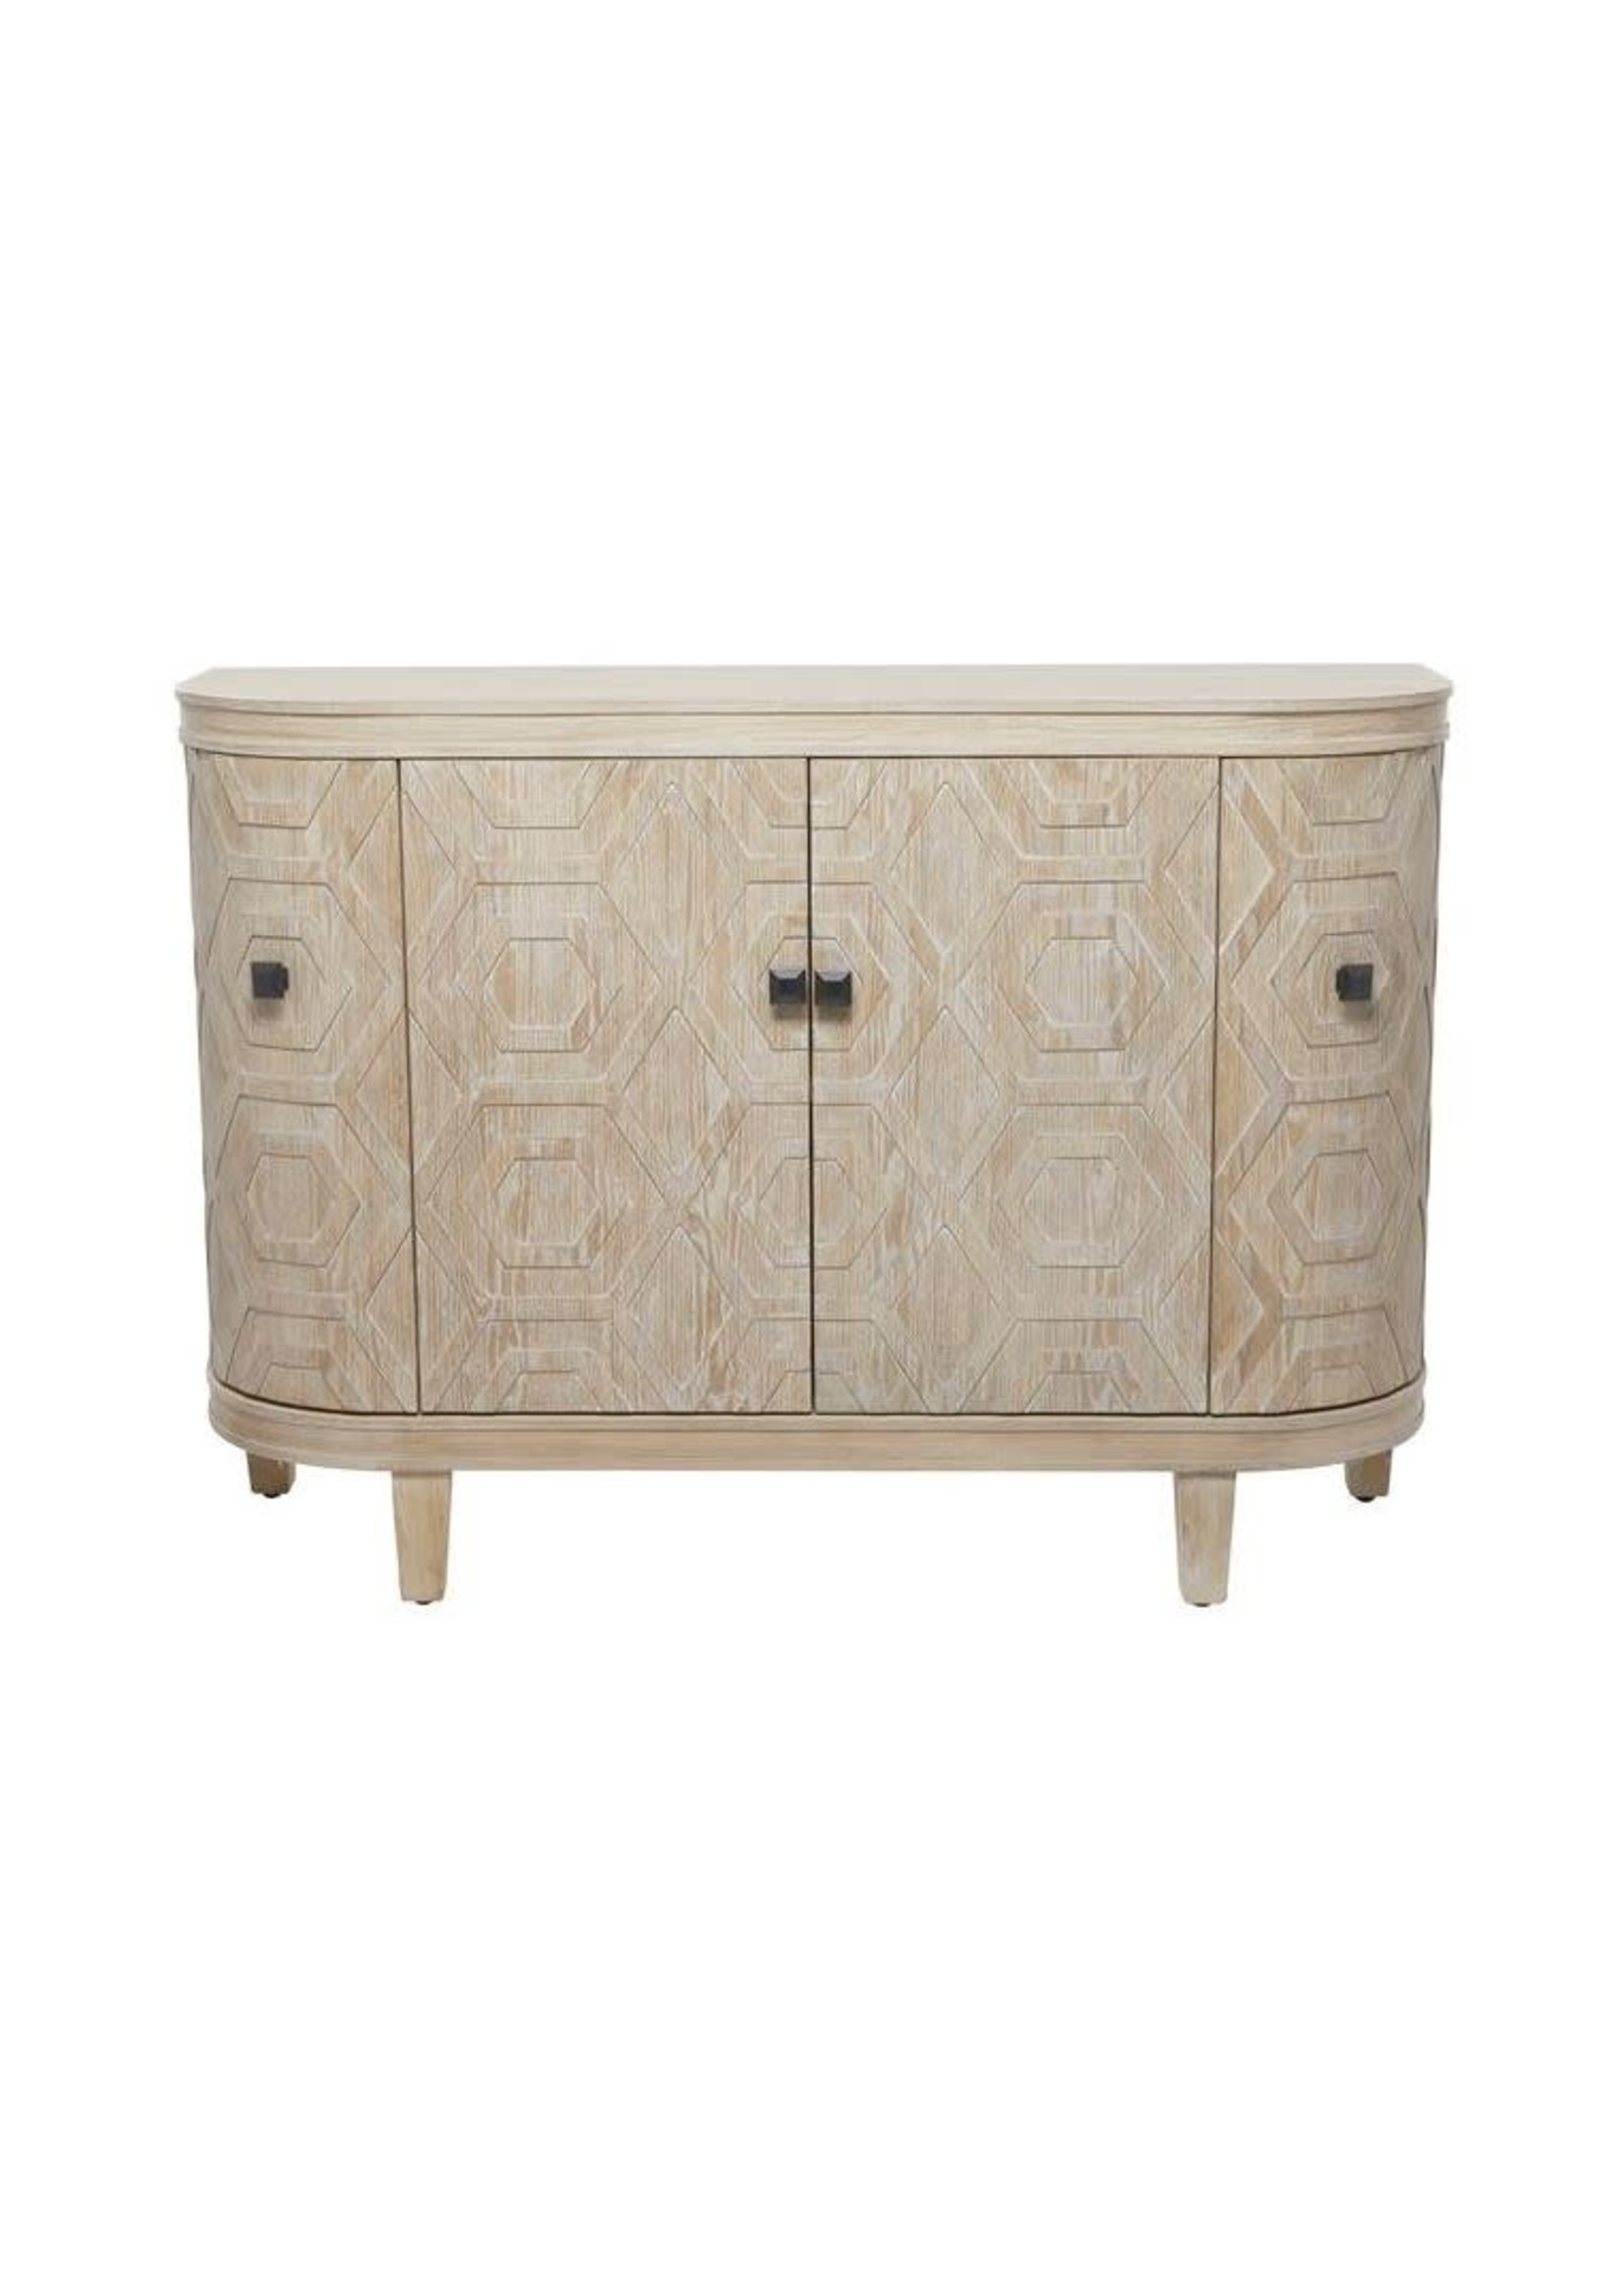 UMA Enterprises 93173 Brown Wood Traditional Cabinet, 34" x 47" x 15"